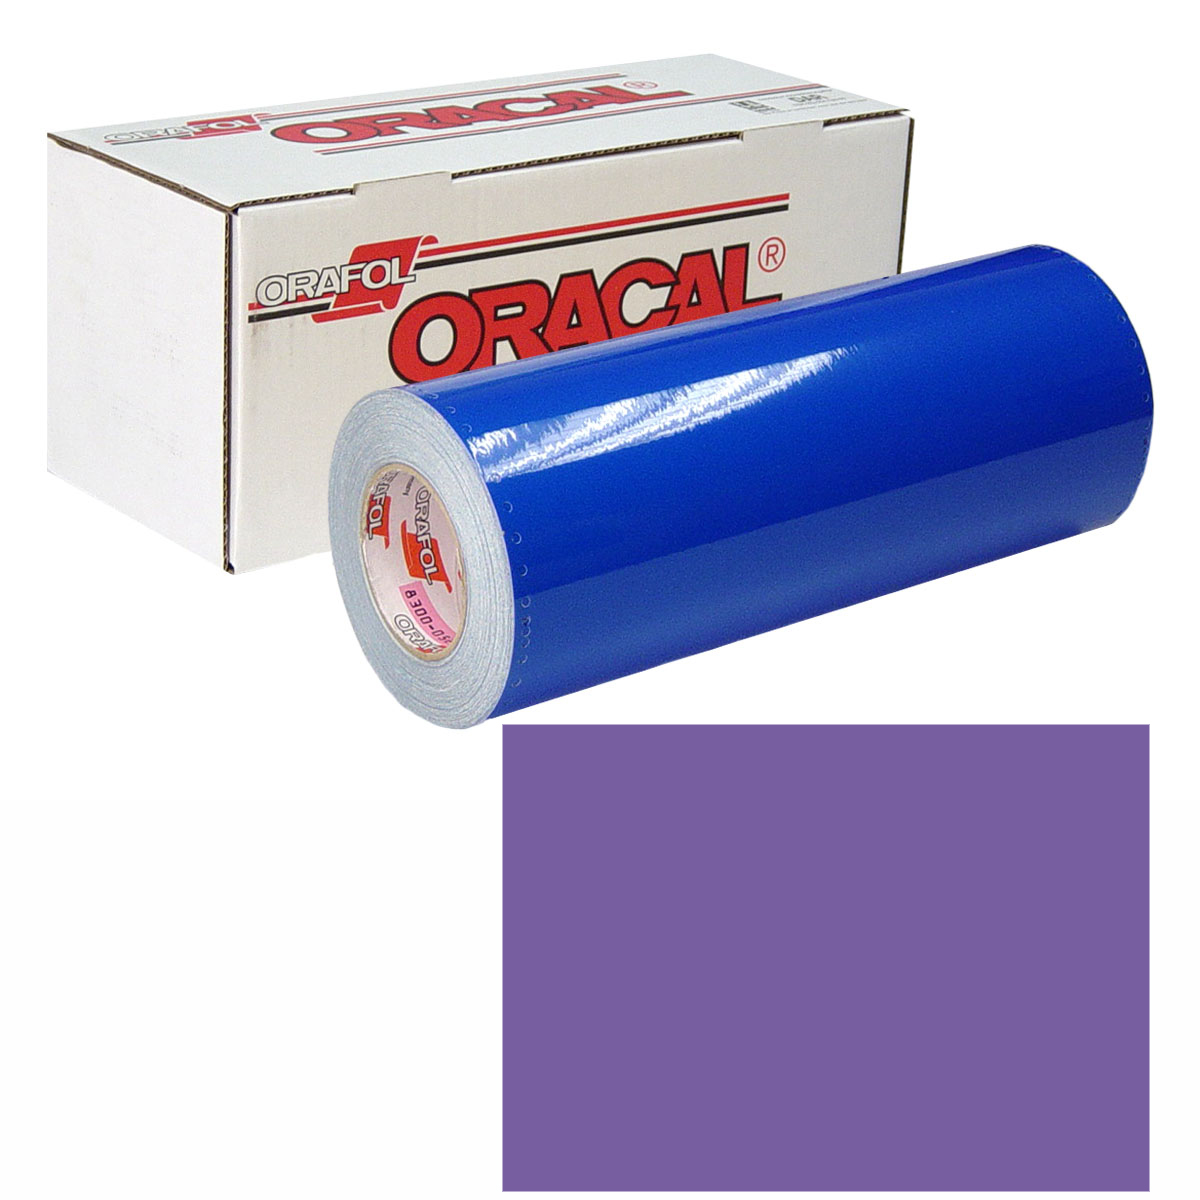 ORACAL 631 15in X 10yd 043 Lavender